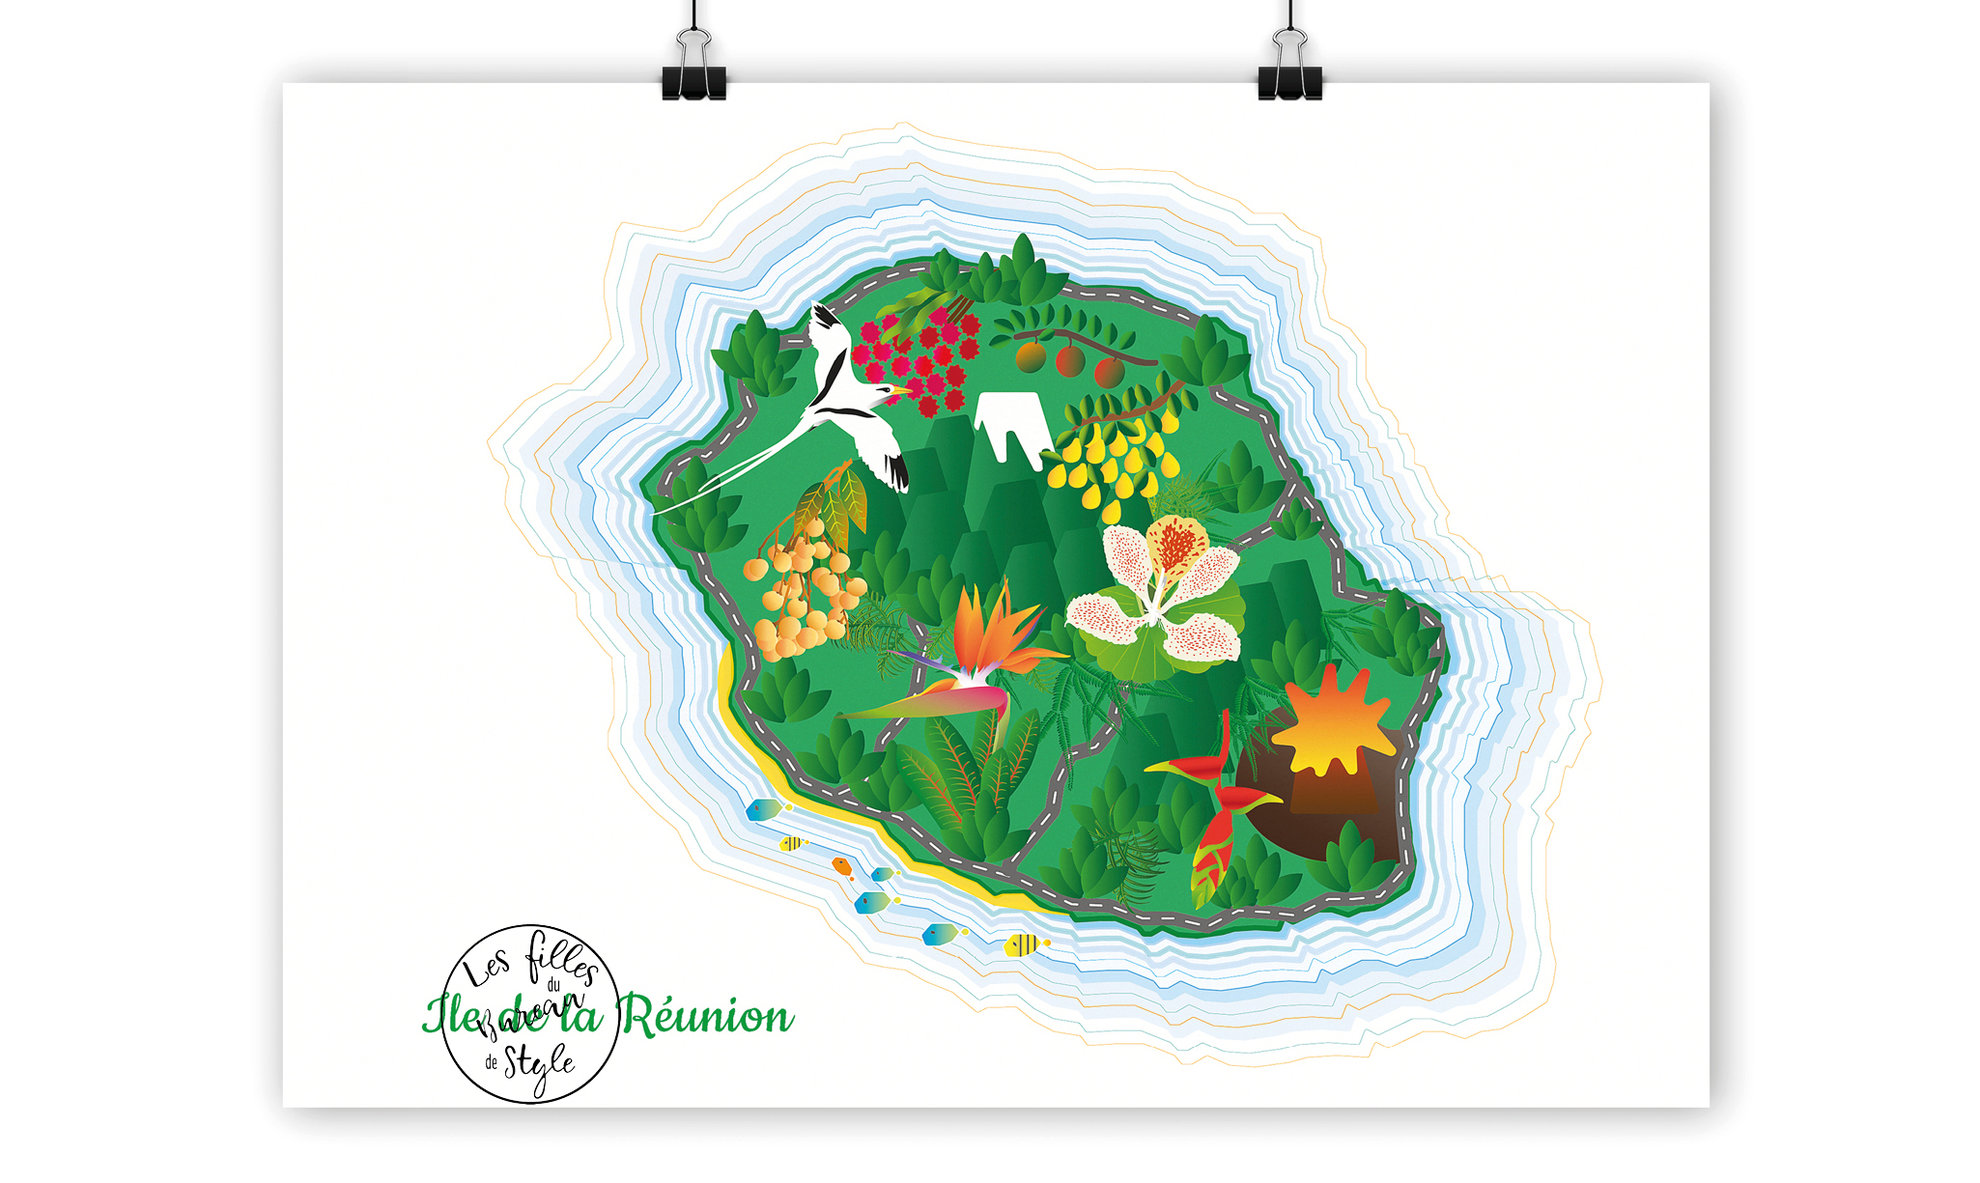 Carte illustrée de la Réunion